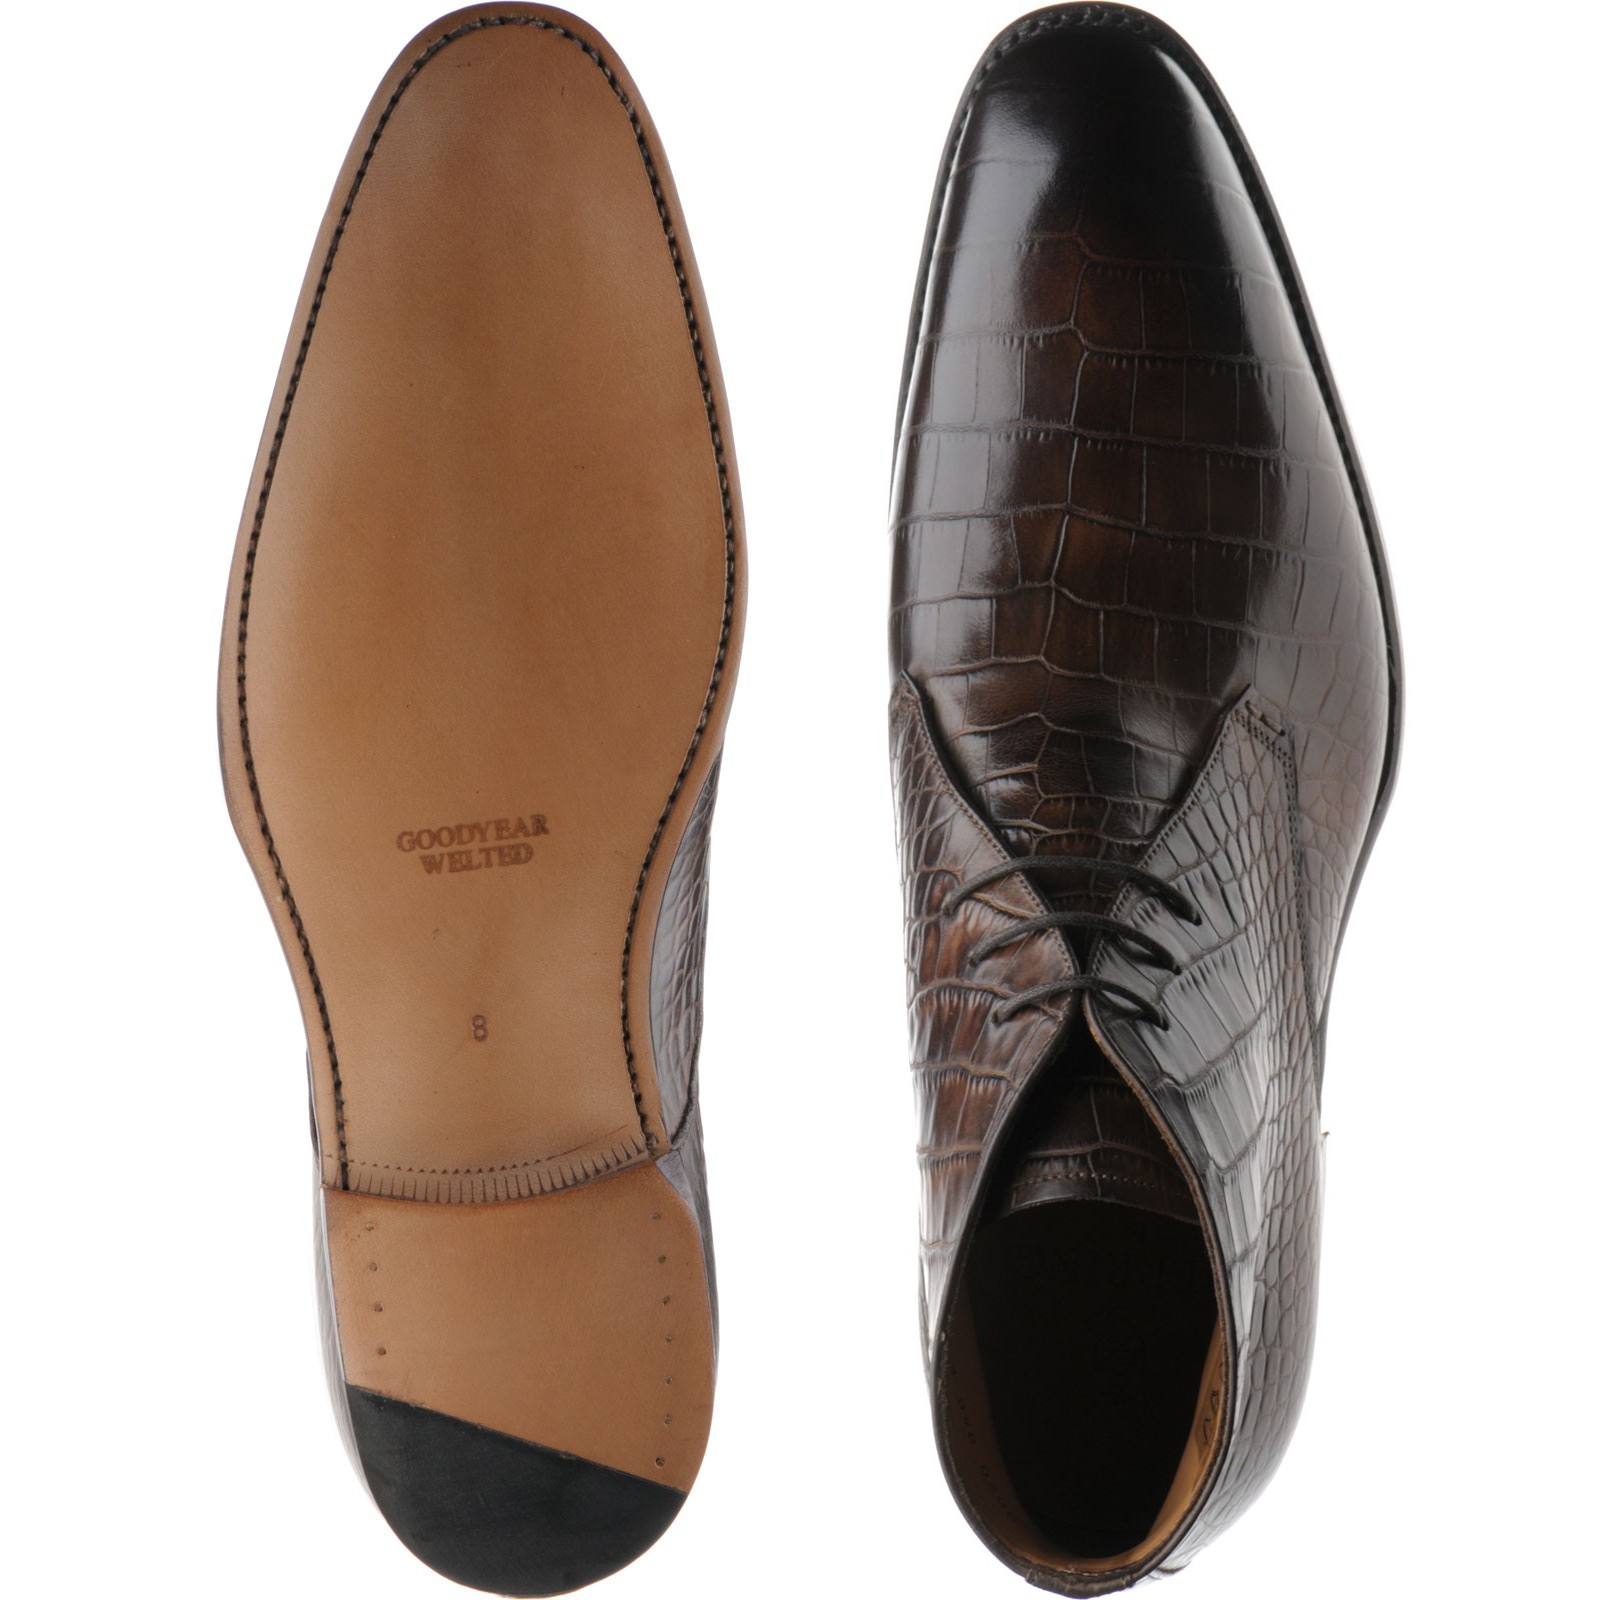 Herring shoes | Herring Classic | Salamanca Chukka boots in Brown Croc ...